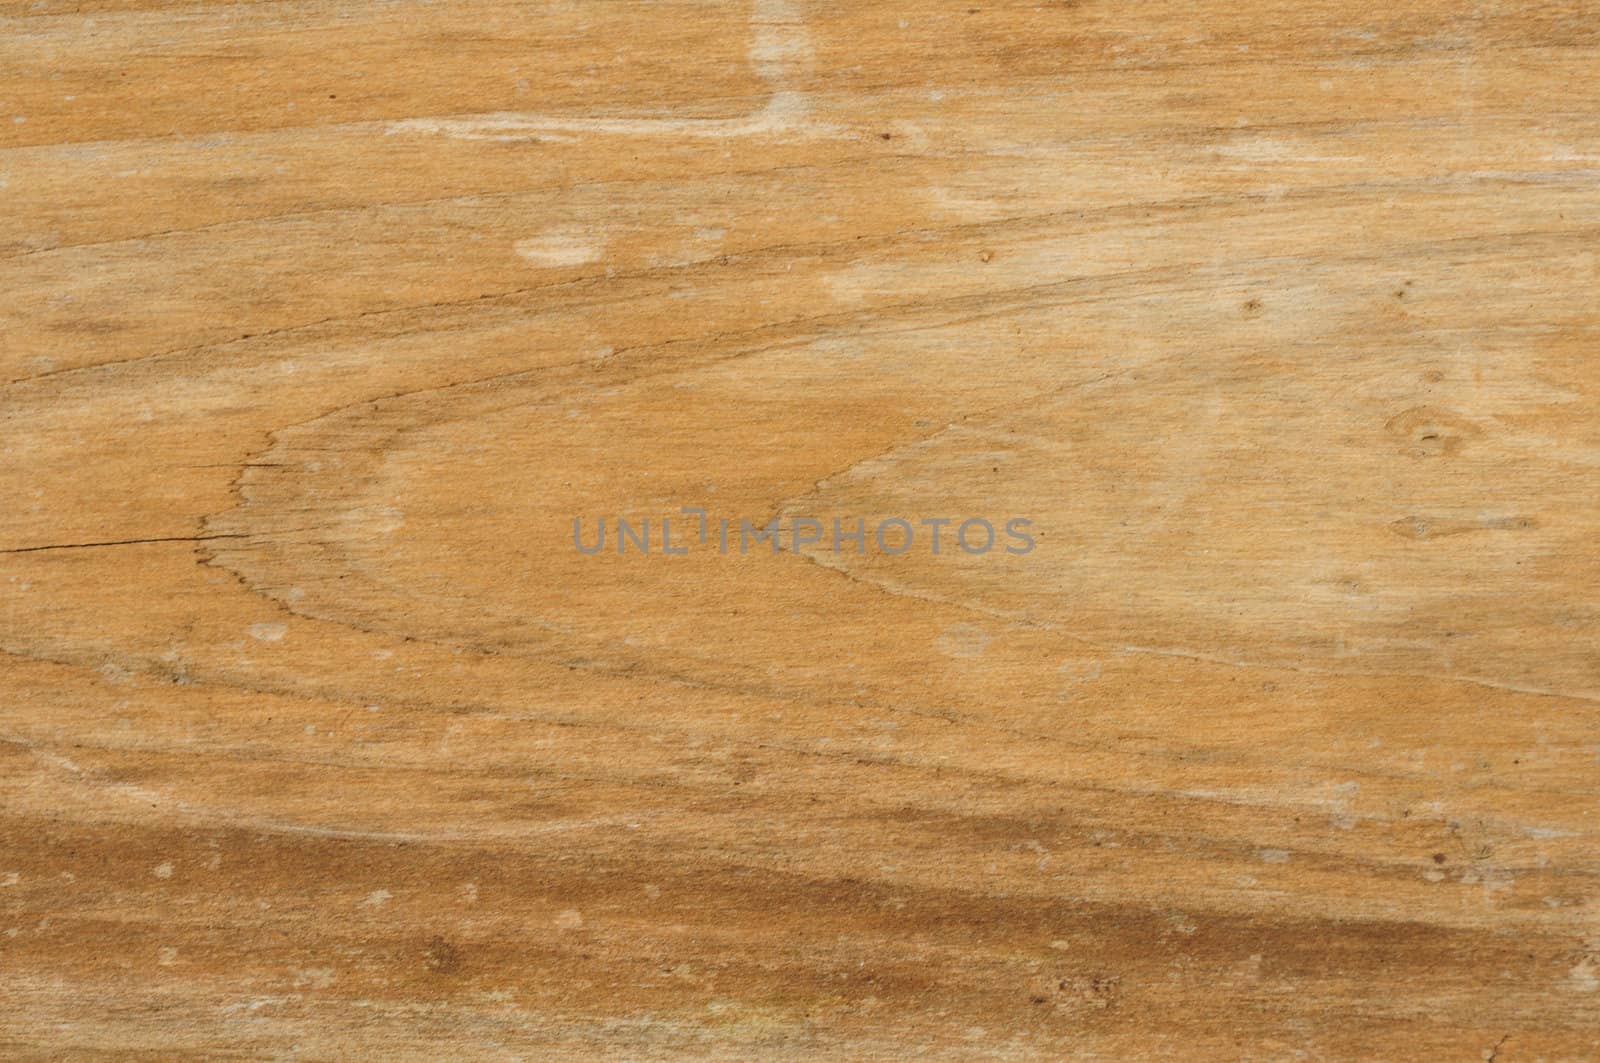 Natural wood grain background